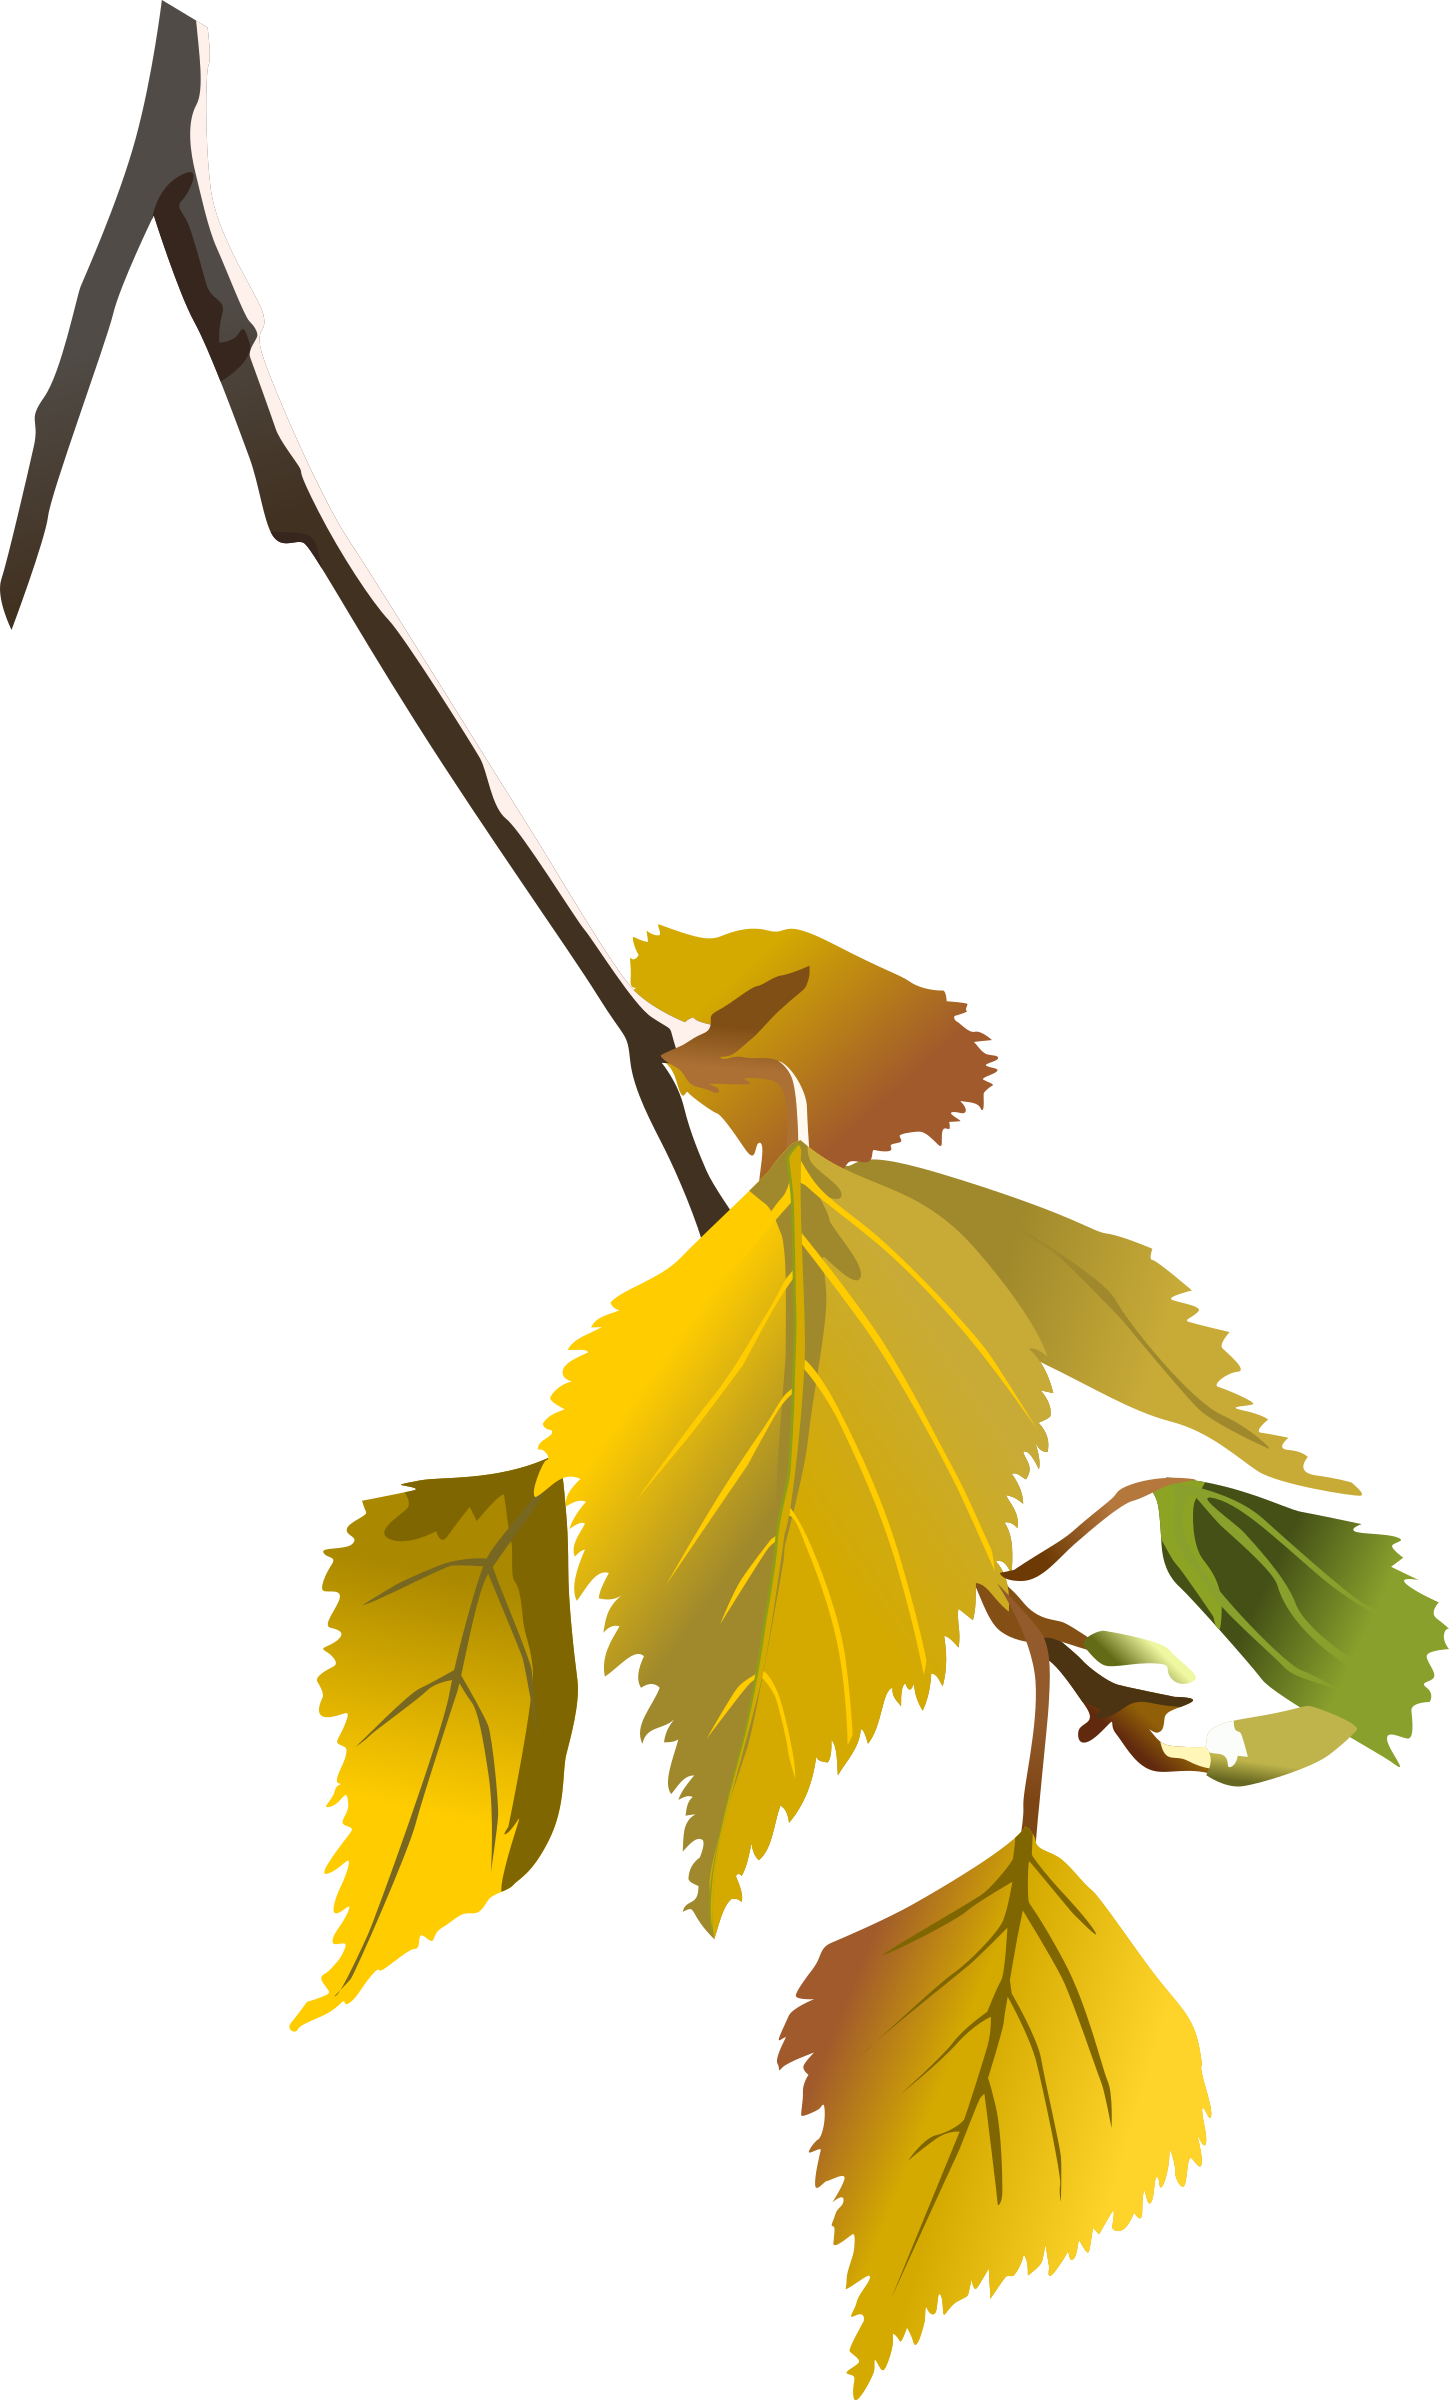 Leafs autumn big image. Clipart leaf yellow birch